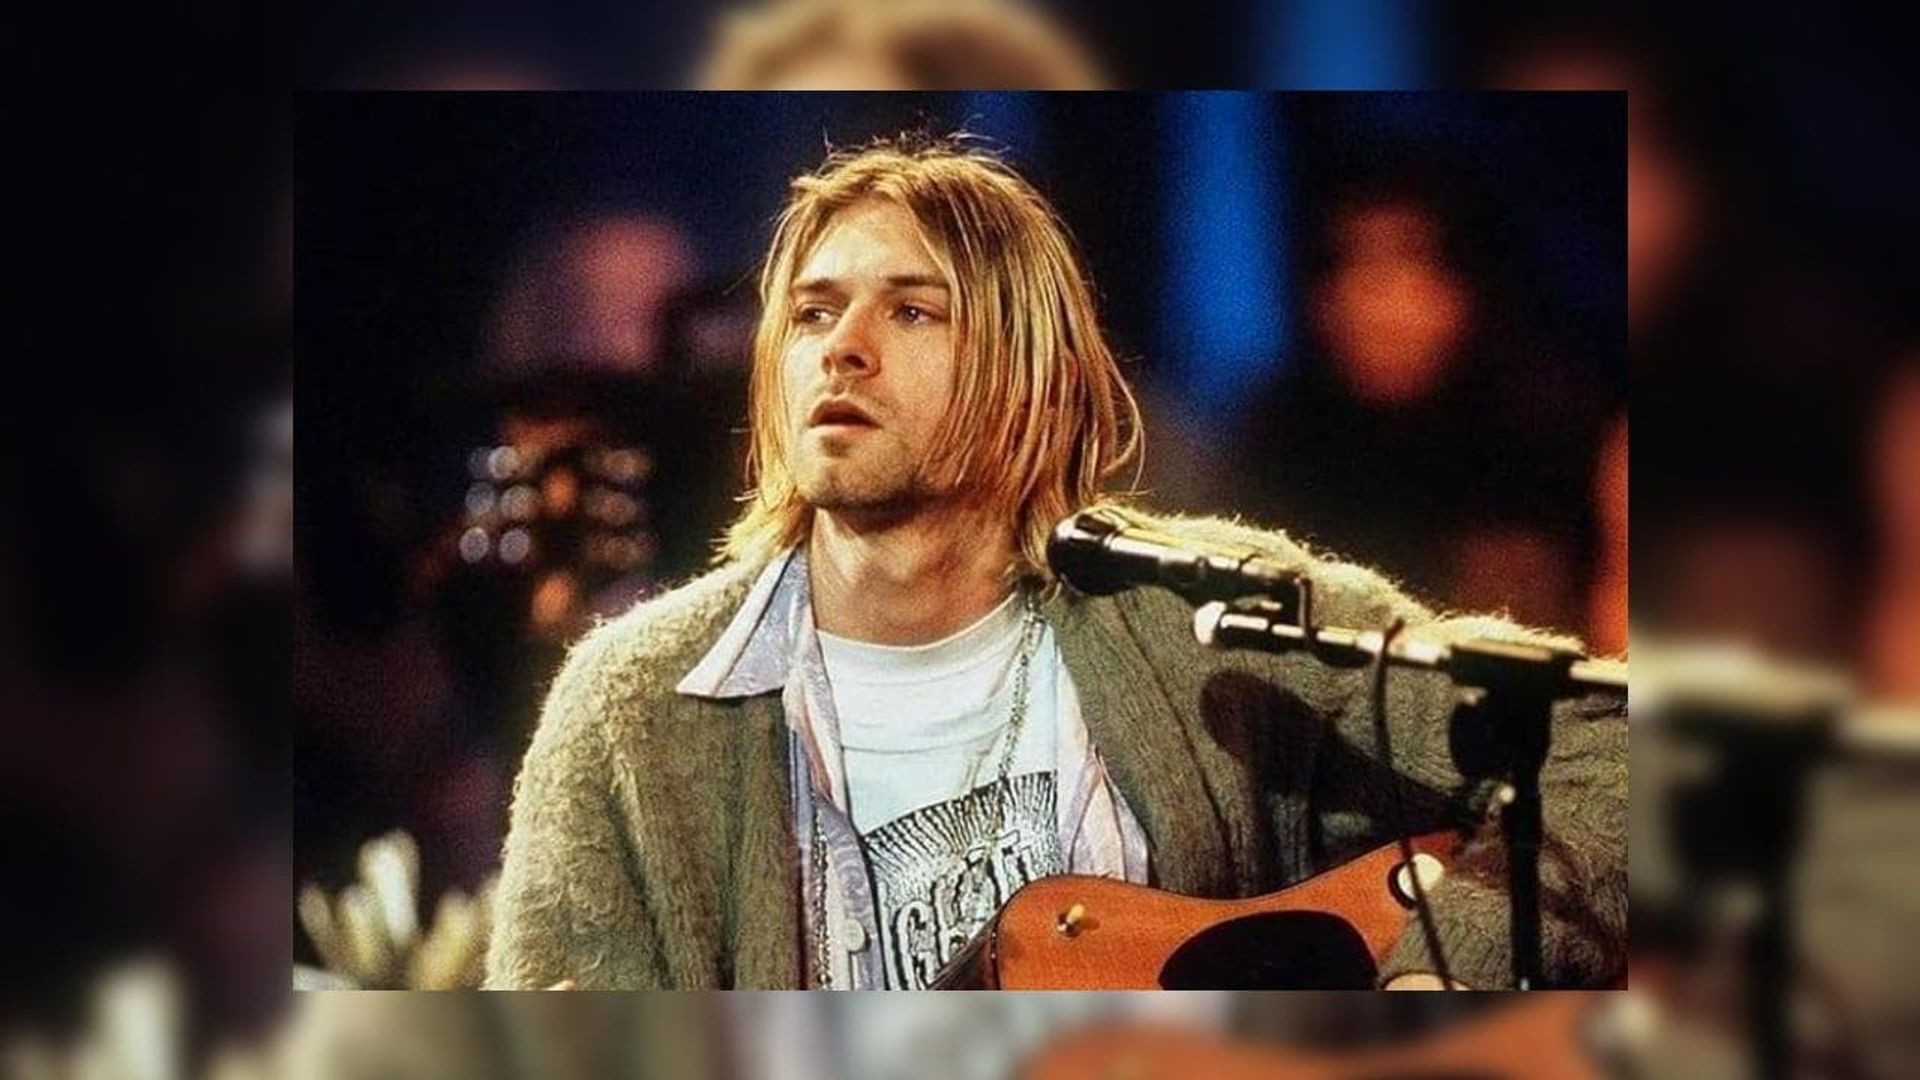 Kurt Cobain About a Son background